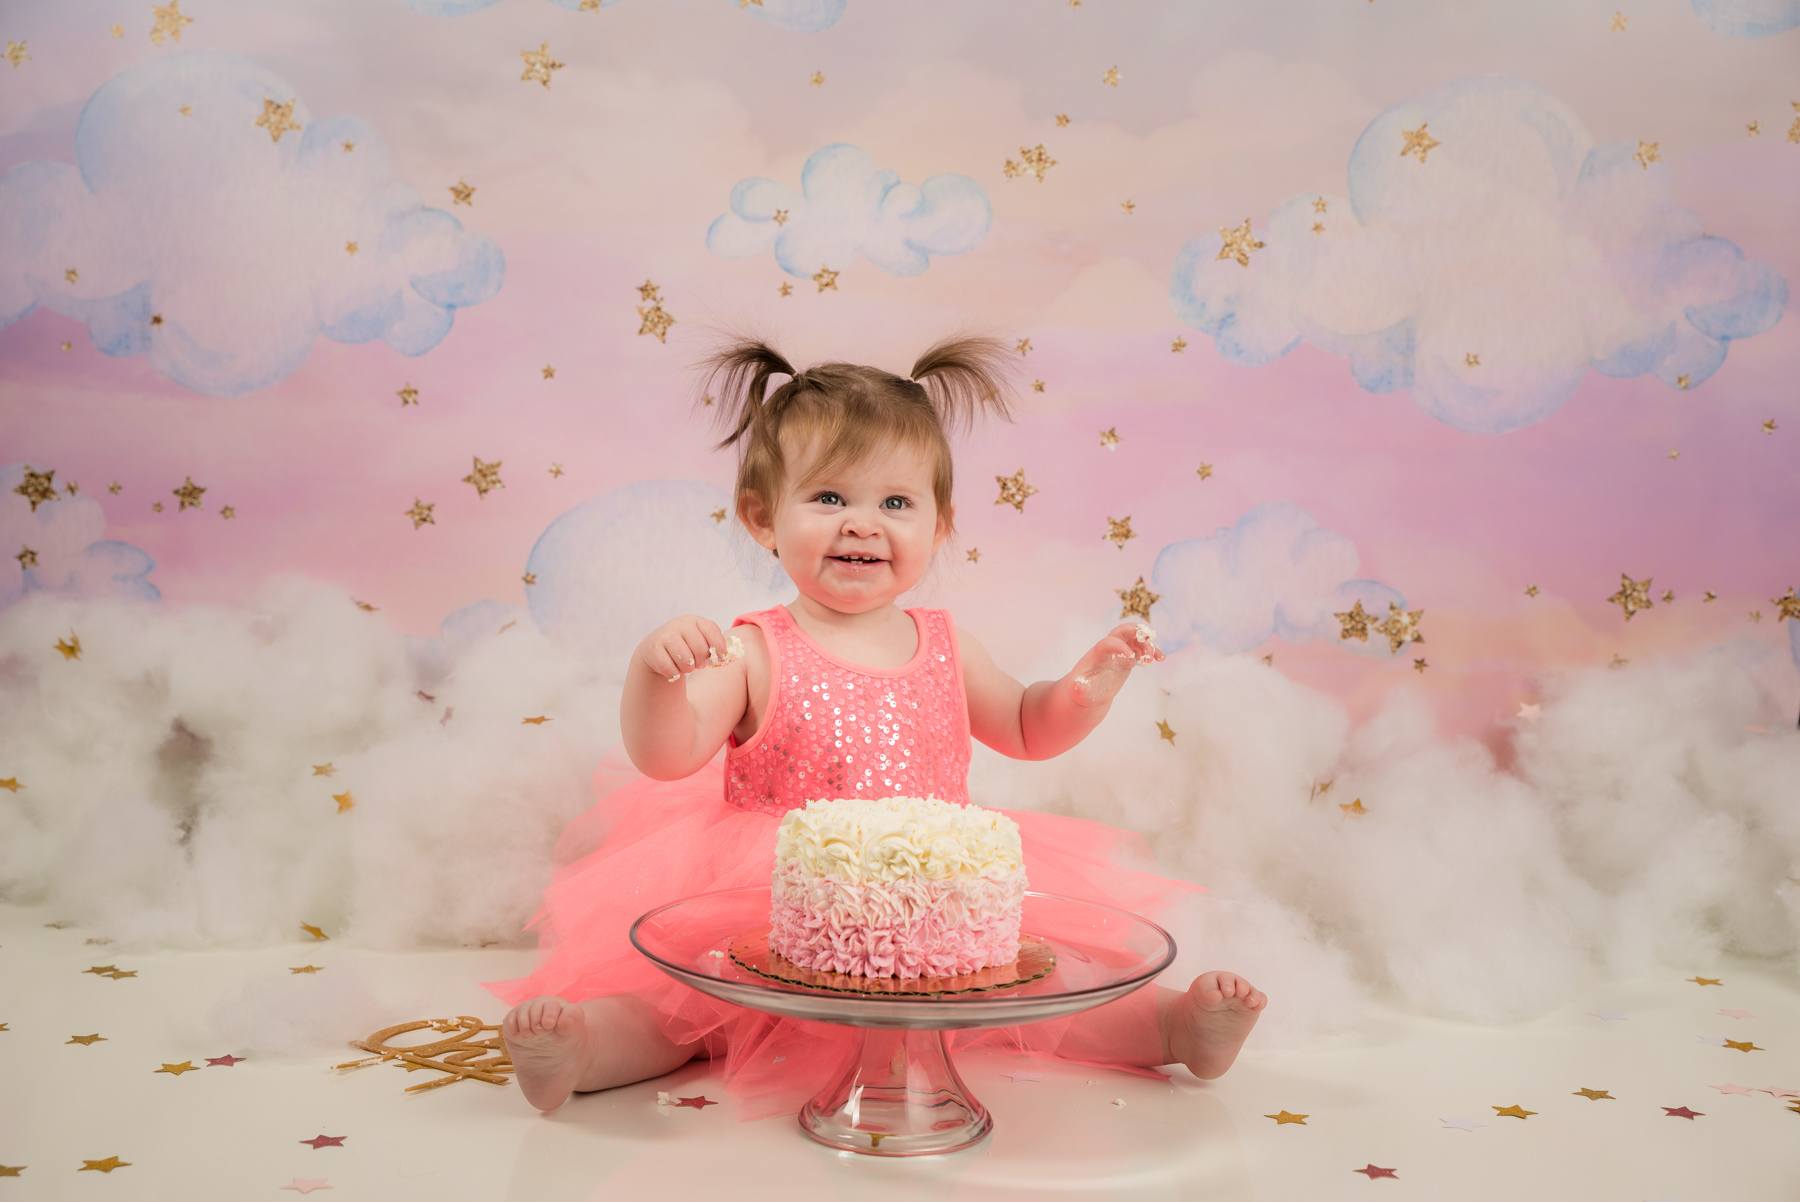 Baby Cake Smash 4 - Portfolio: Cake Smash